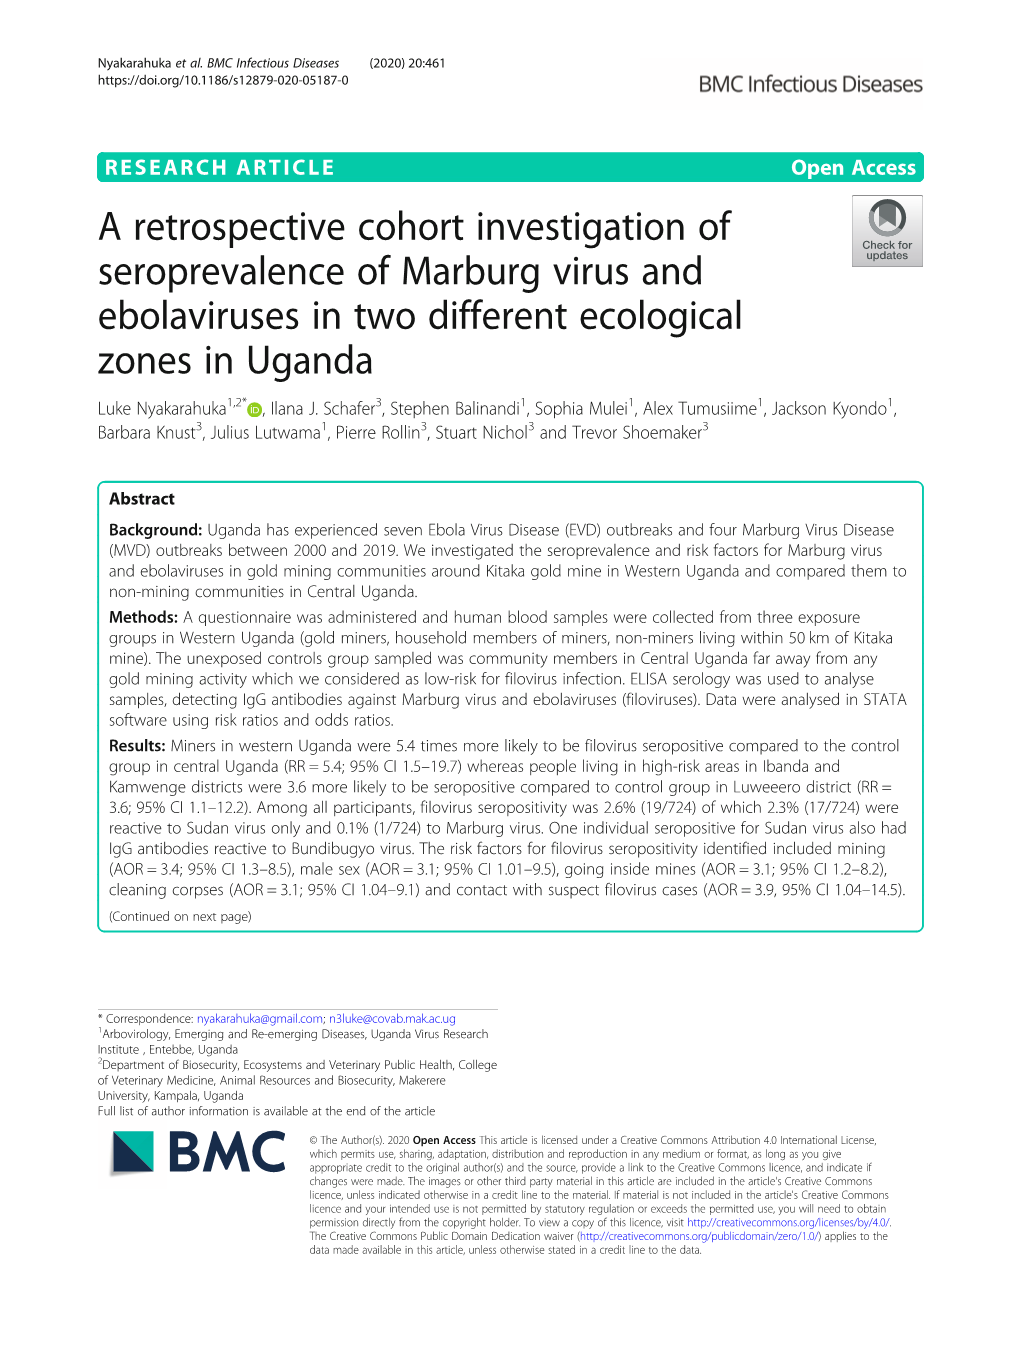 A Retrospective Cohort Investigation of Seroprevalence of Marburg Virus and Ebolaviruses in Two Different Ecological Zones in Uganda Luke Nyakarahuka1,2* , Ilana J